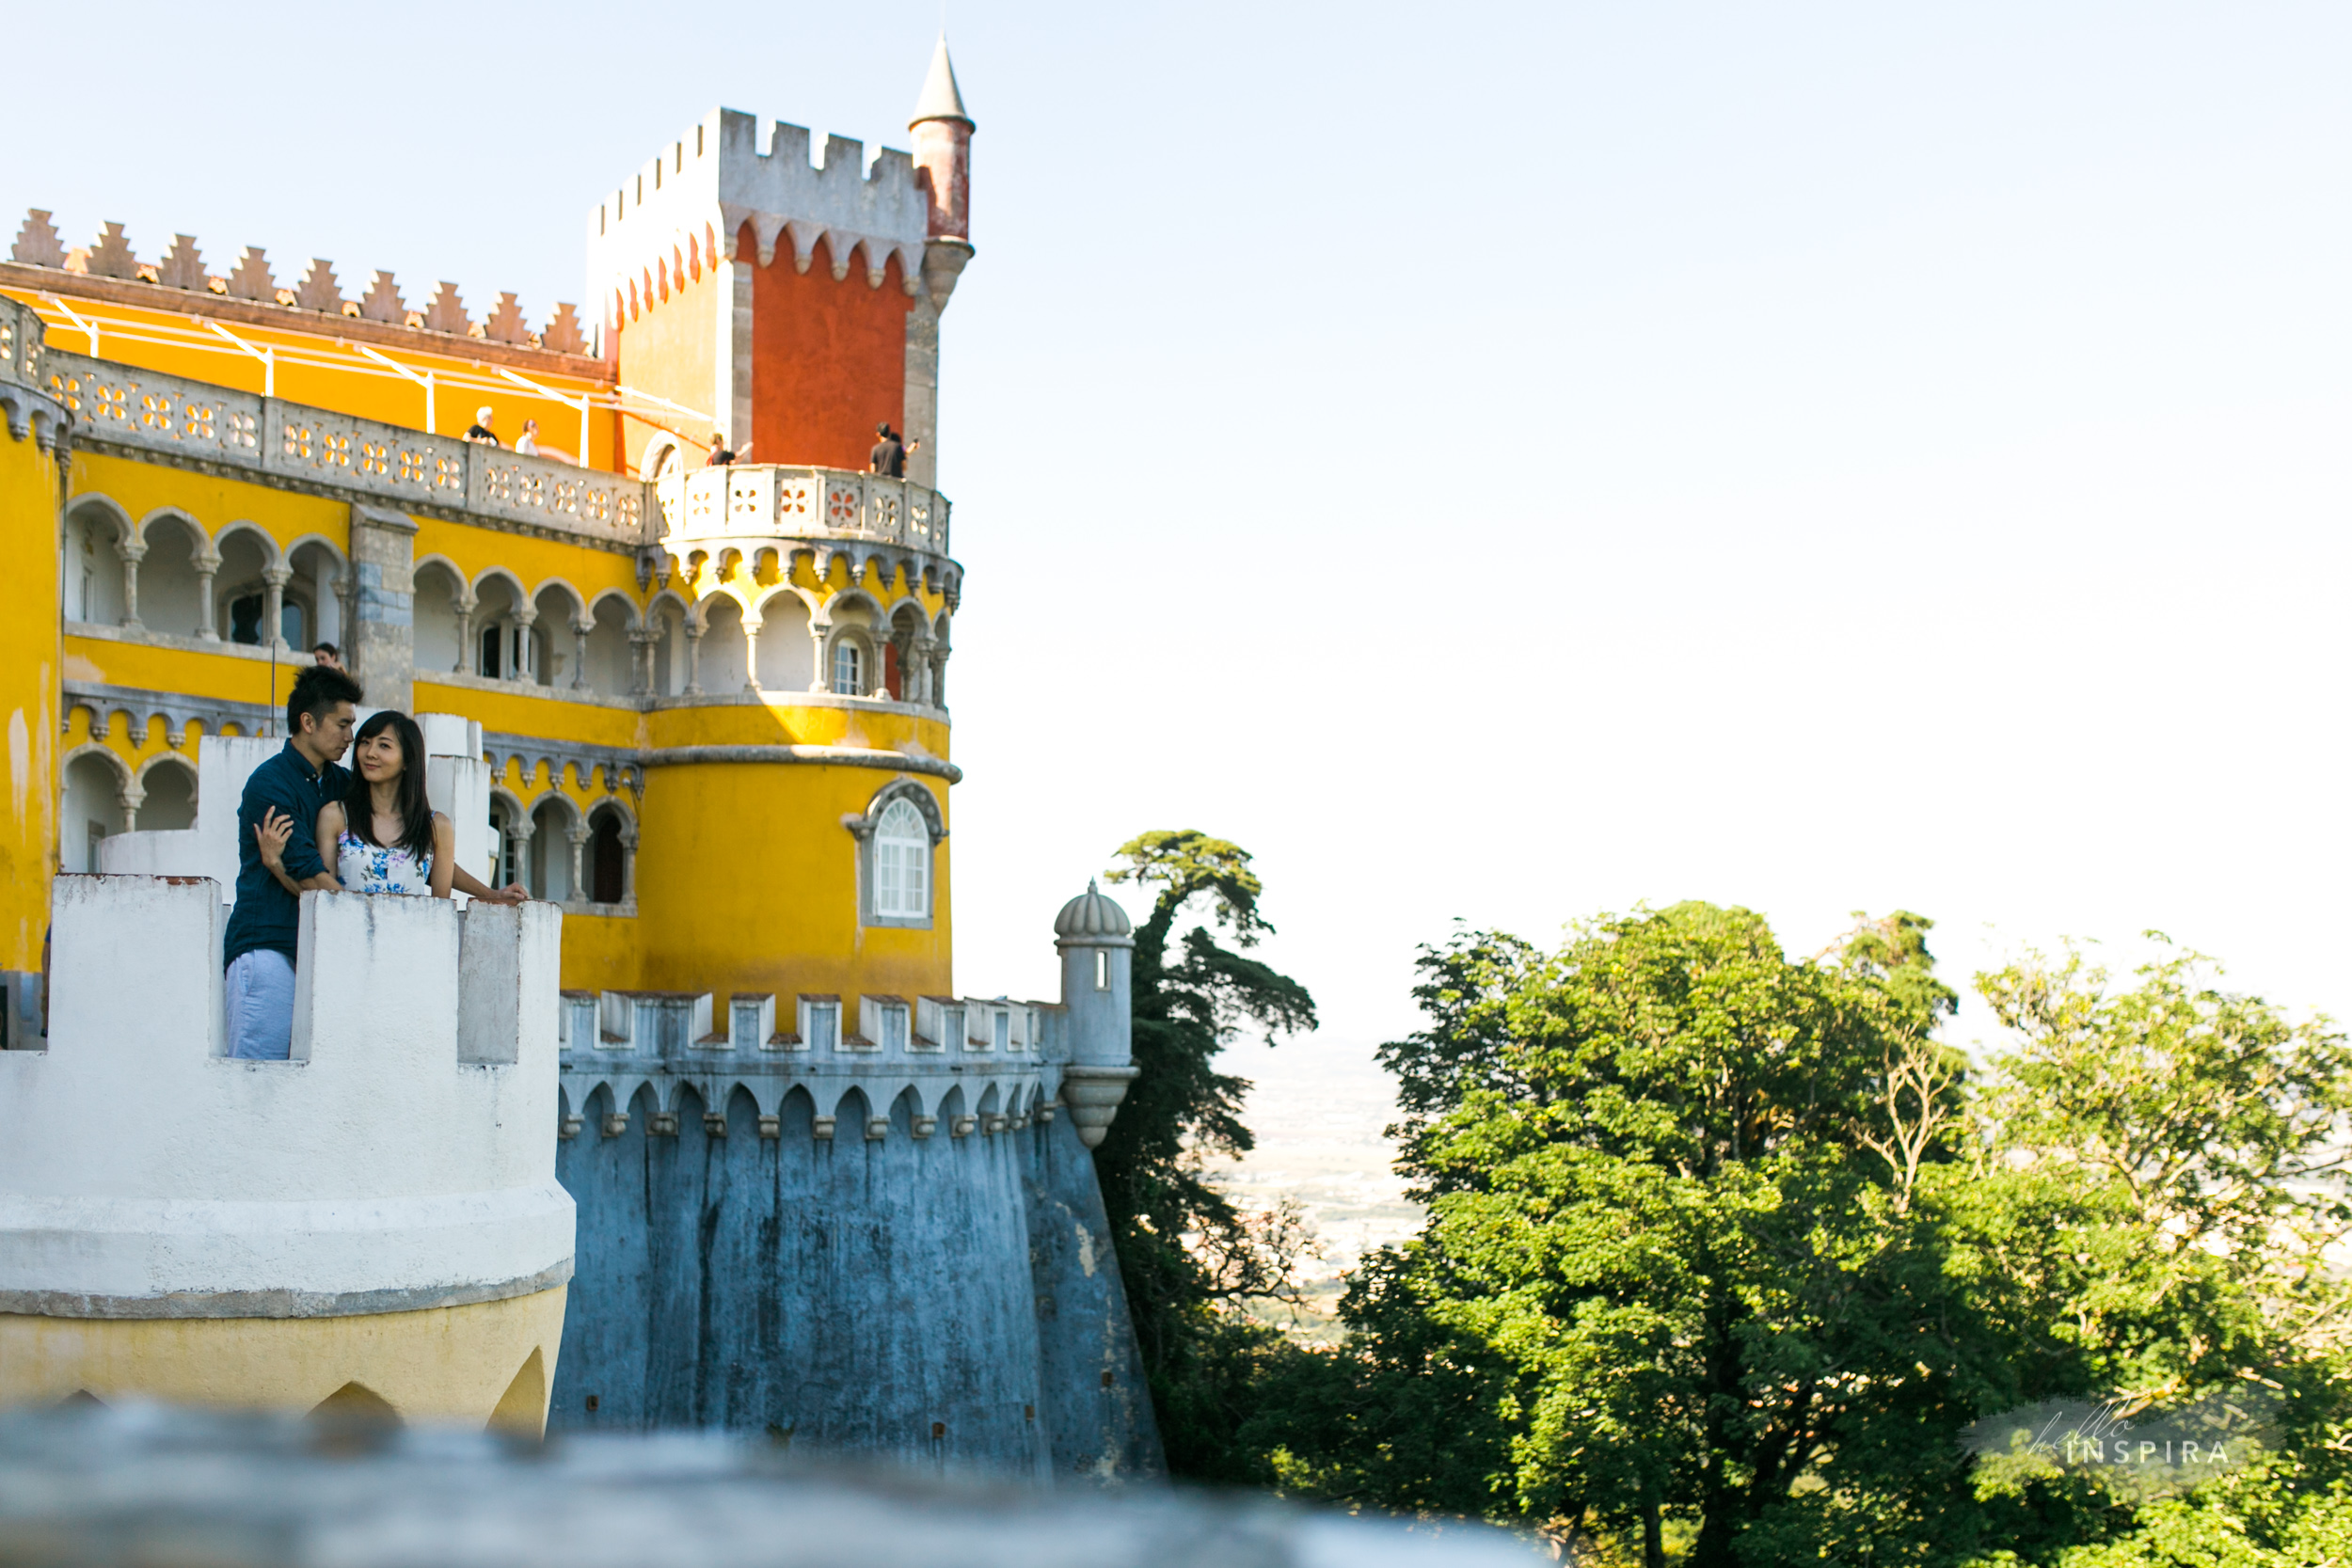 must visit castle in portugal